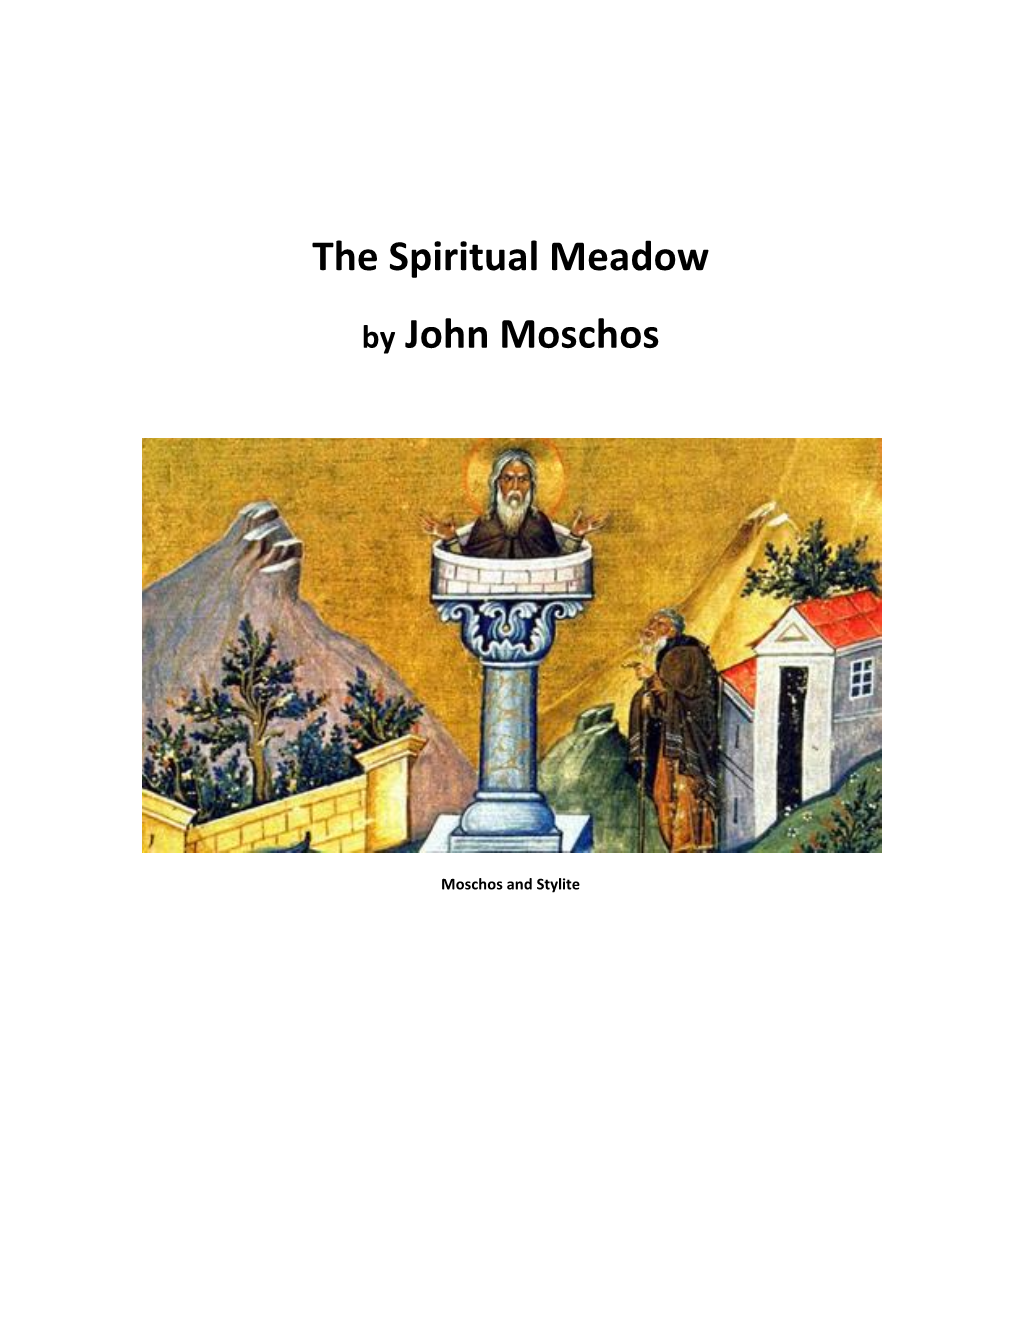 The Spiritual Meadow by John Moschos